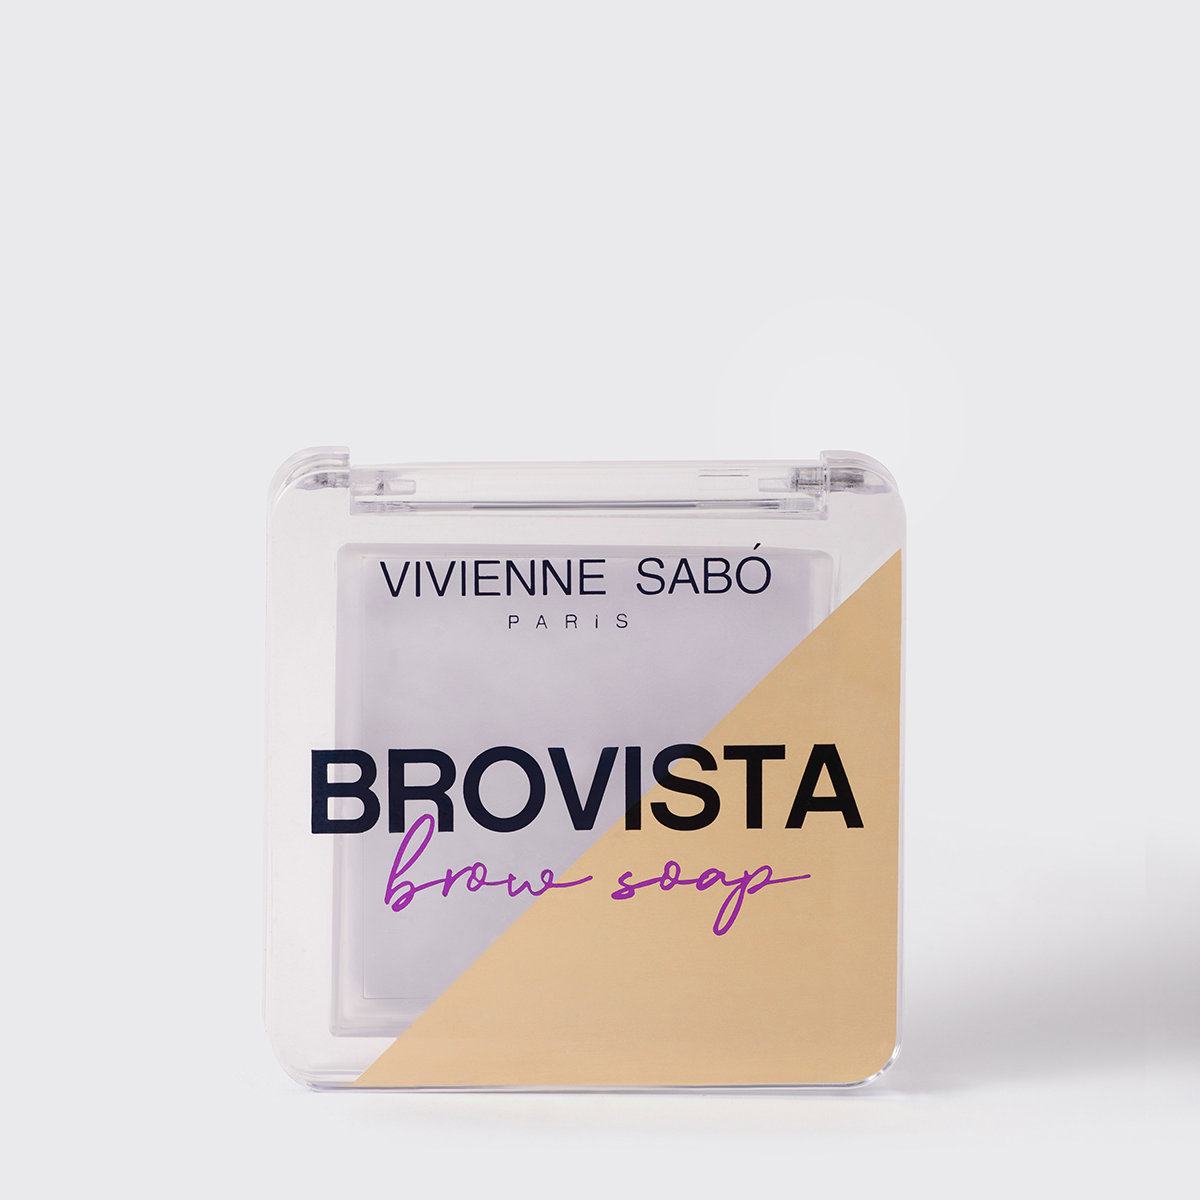 Vivienne Sabo Eyebrow fixative / Fixateur des sourcils Brovista brow soap